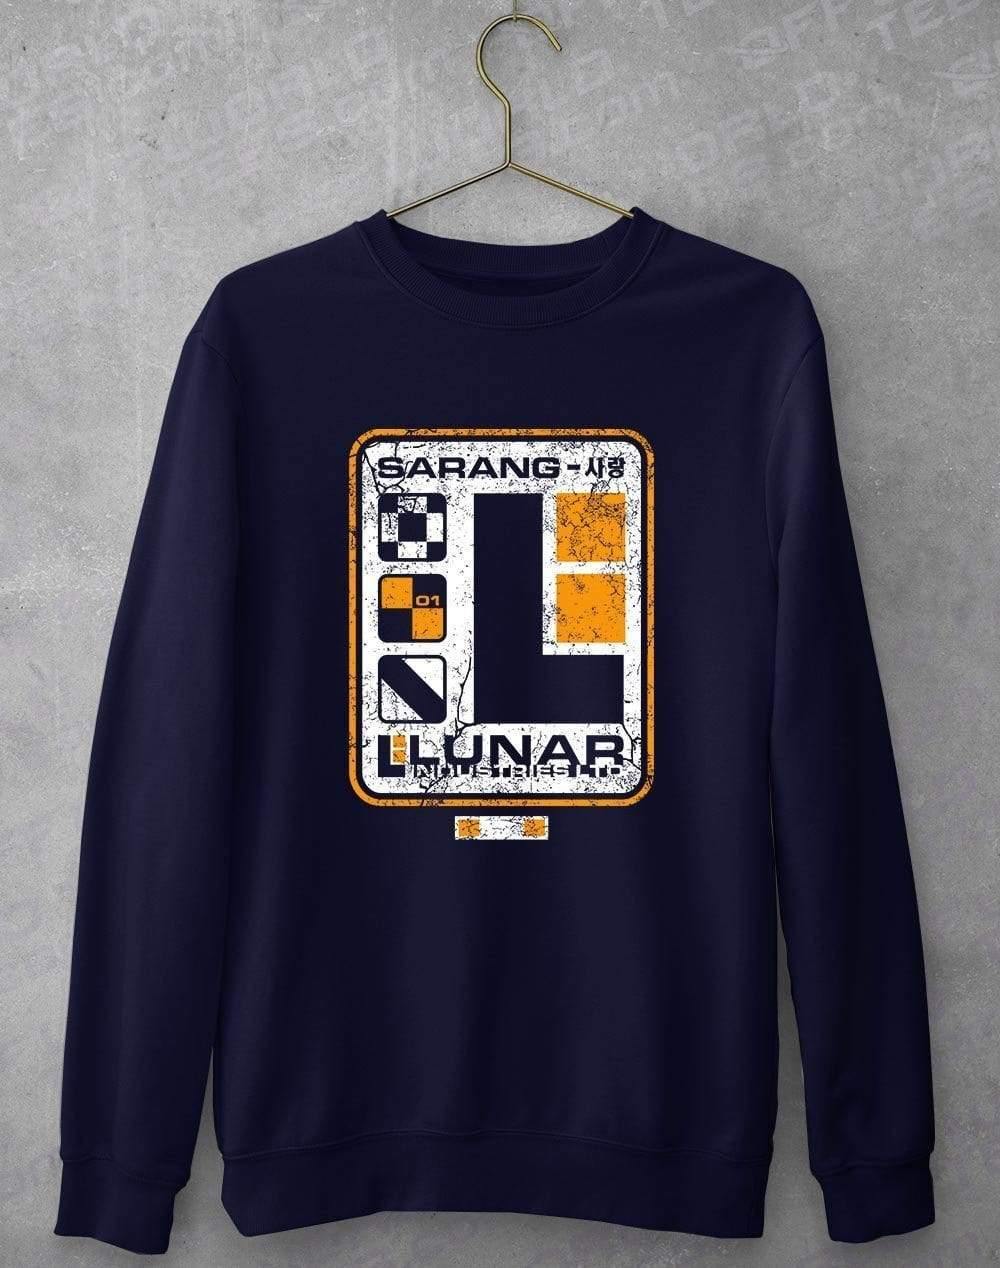 Lunar Industries Sweatshirt S / Navy  - Off World Tees